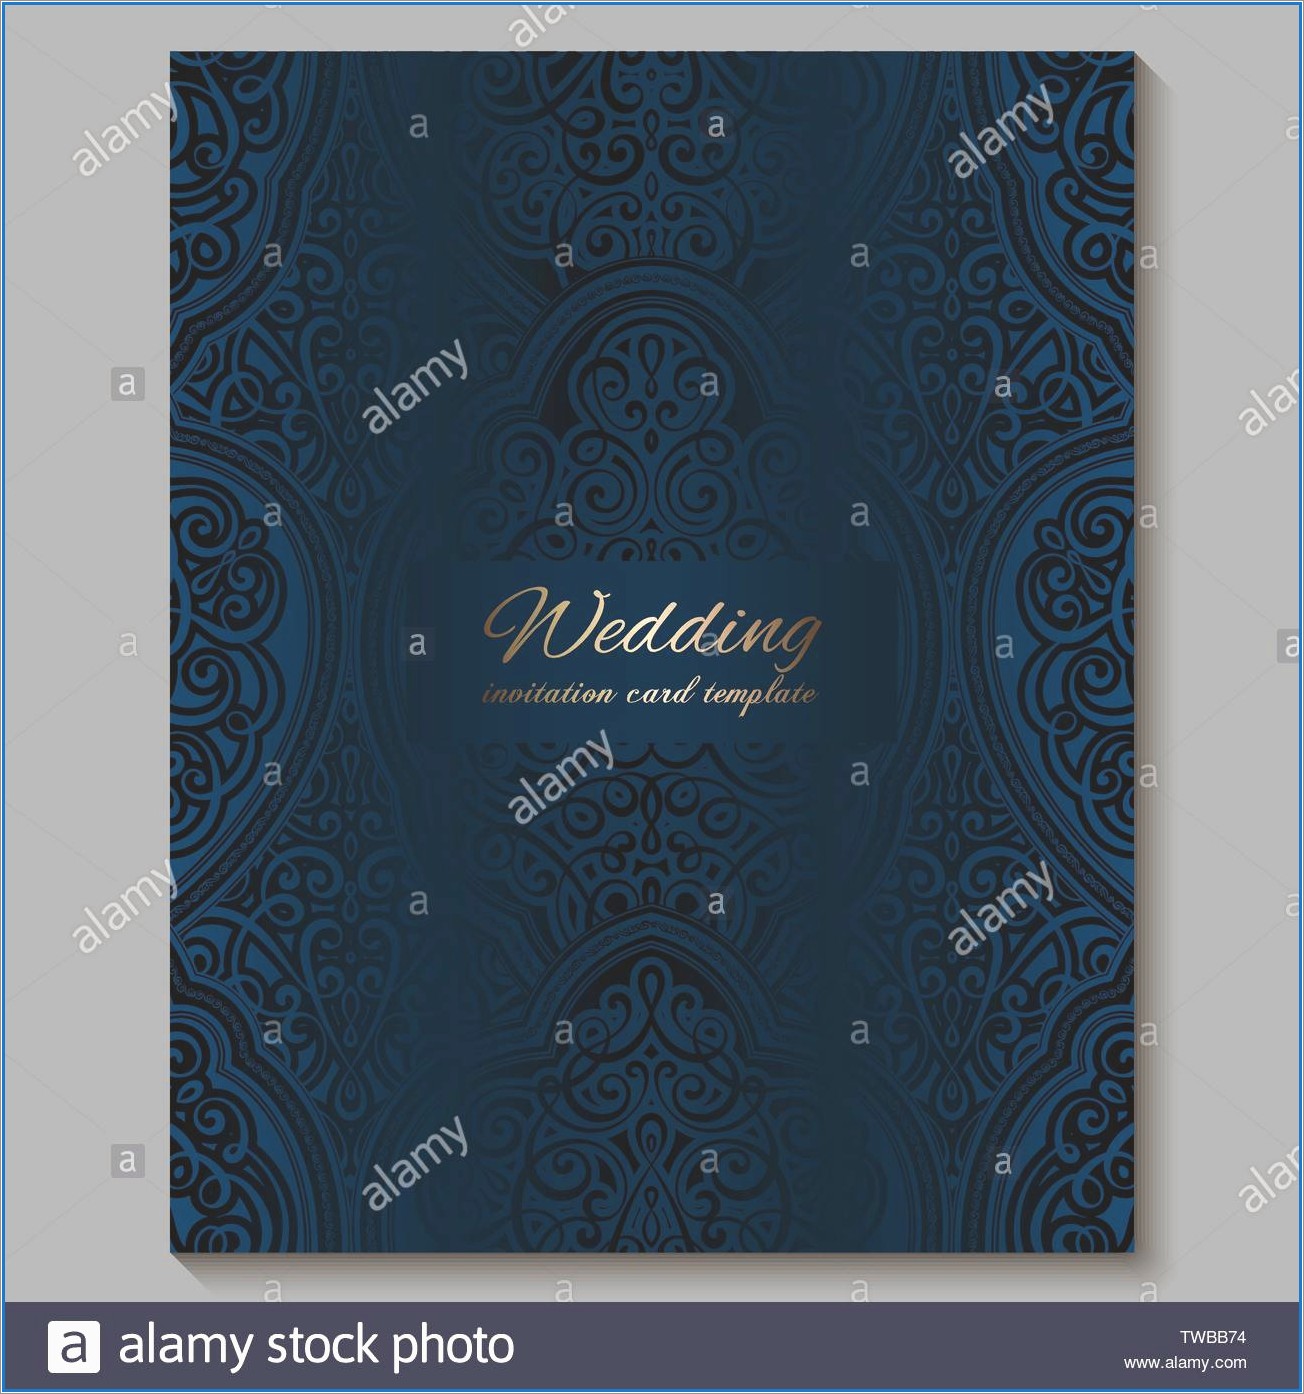 Background Royal Blue Wedding Invitation Design